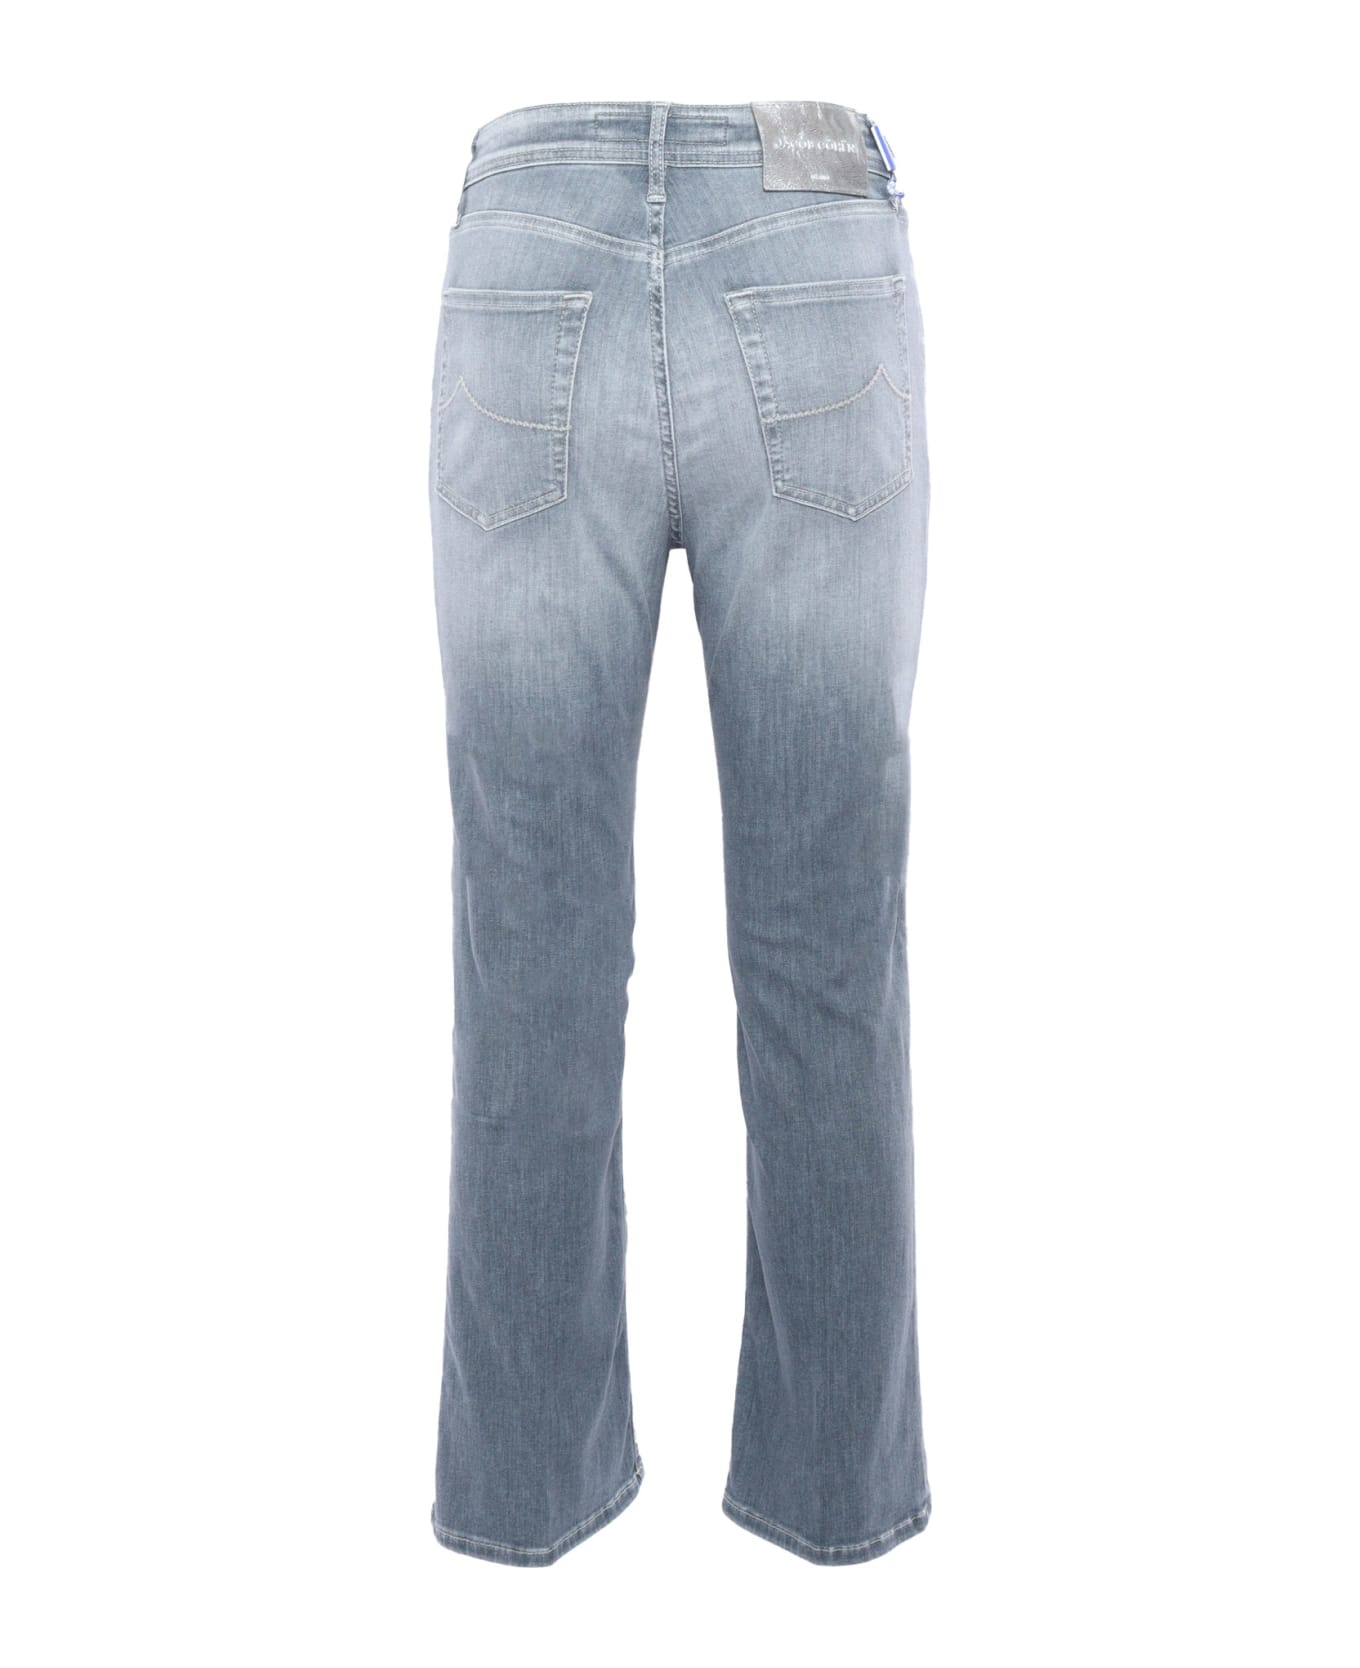 Jacob Cohen Gray 5 Pocket Jeans - GREY デニム